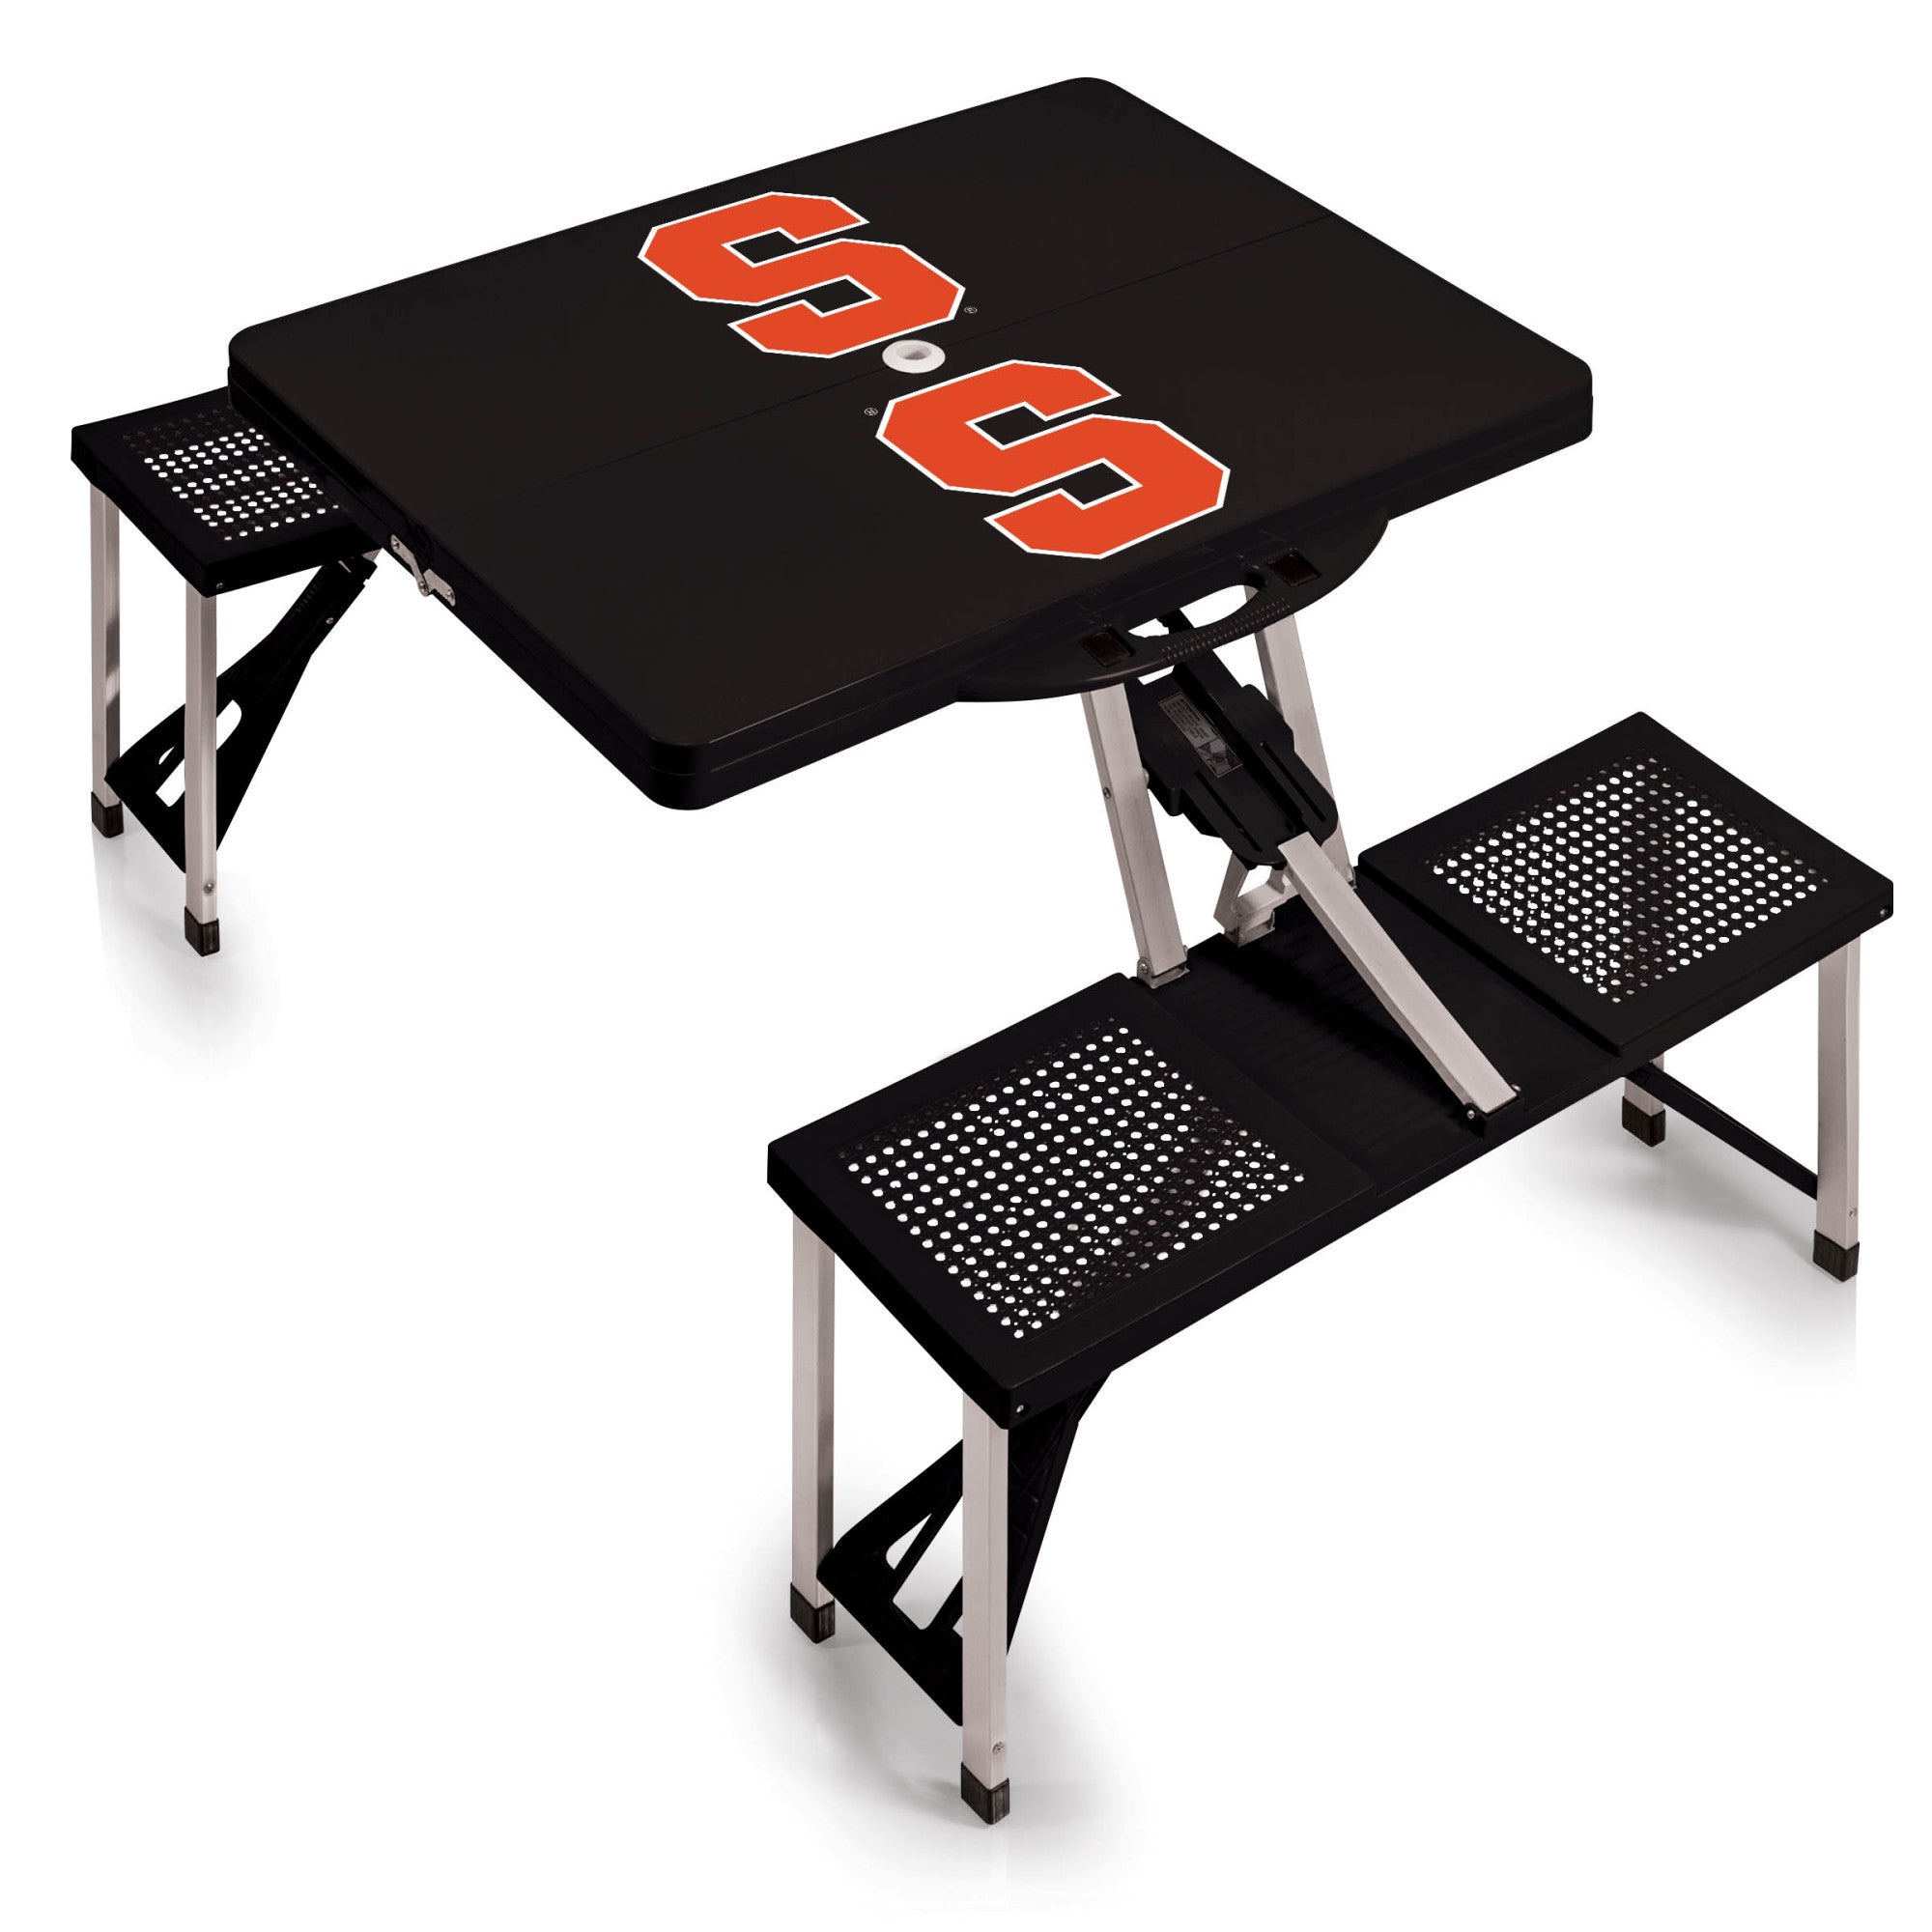 Syracuse Orange - Picnic Table Portable Folding Table with Seats